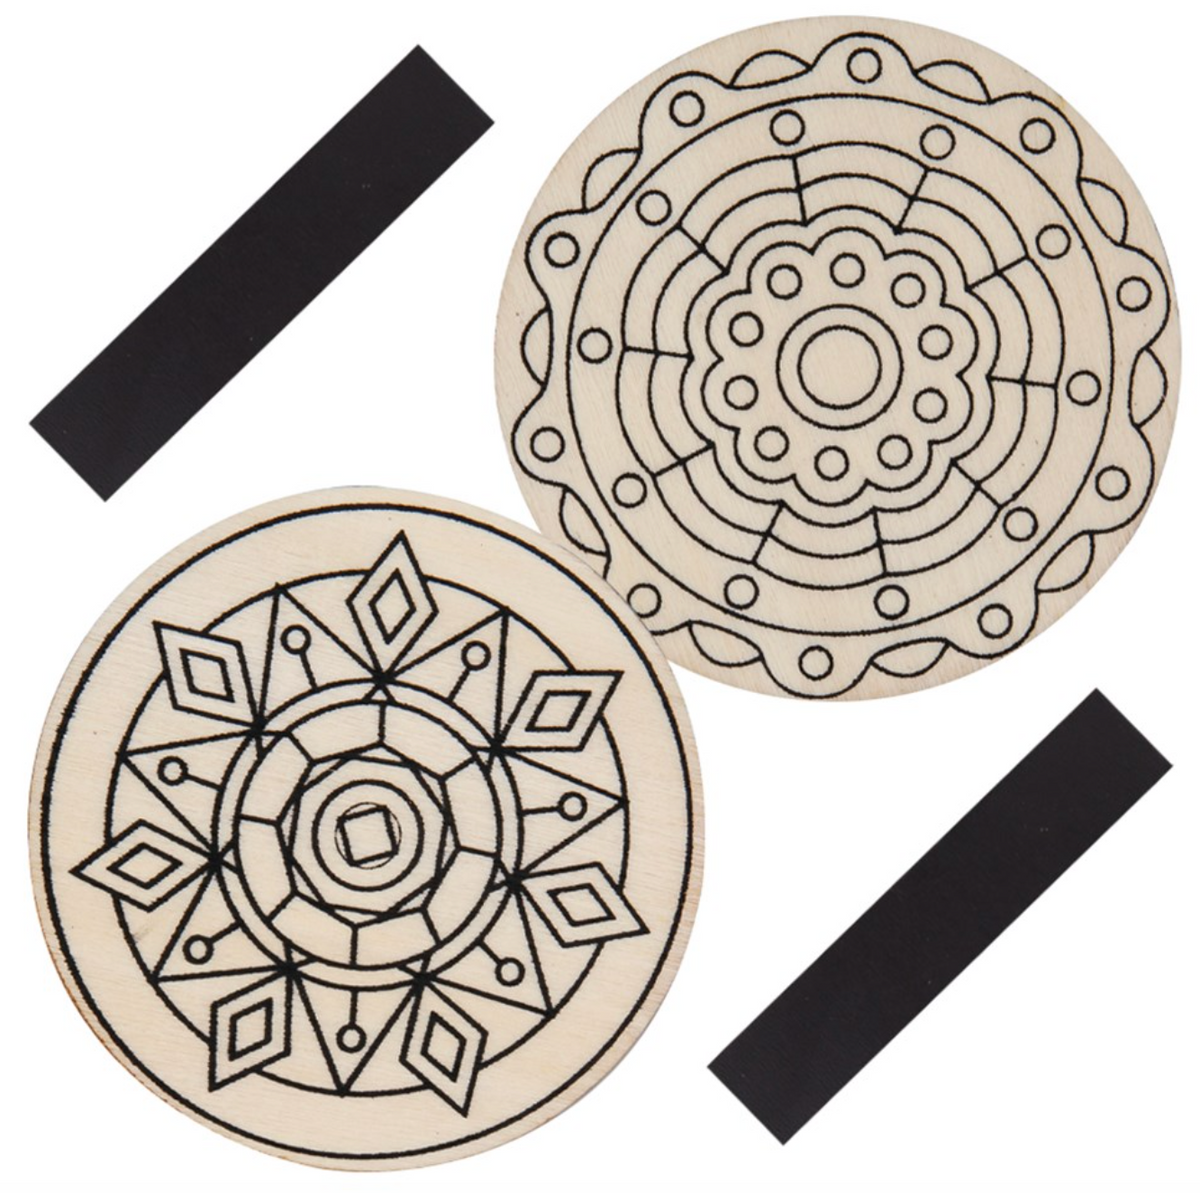 Printed Wooden Magnets - Mandalas - Pack of 10